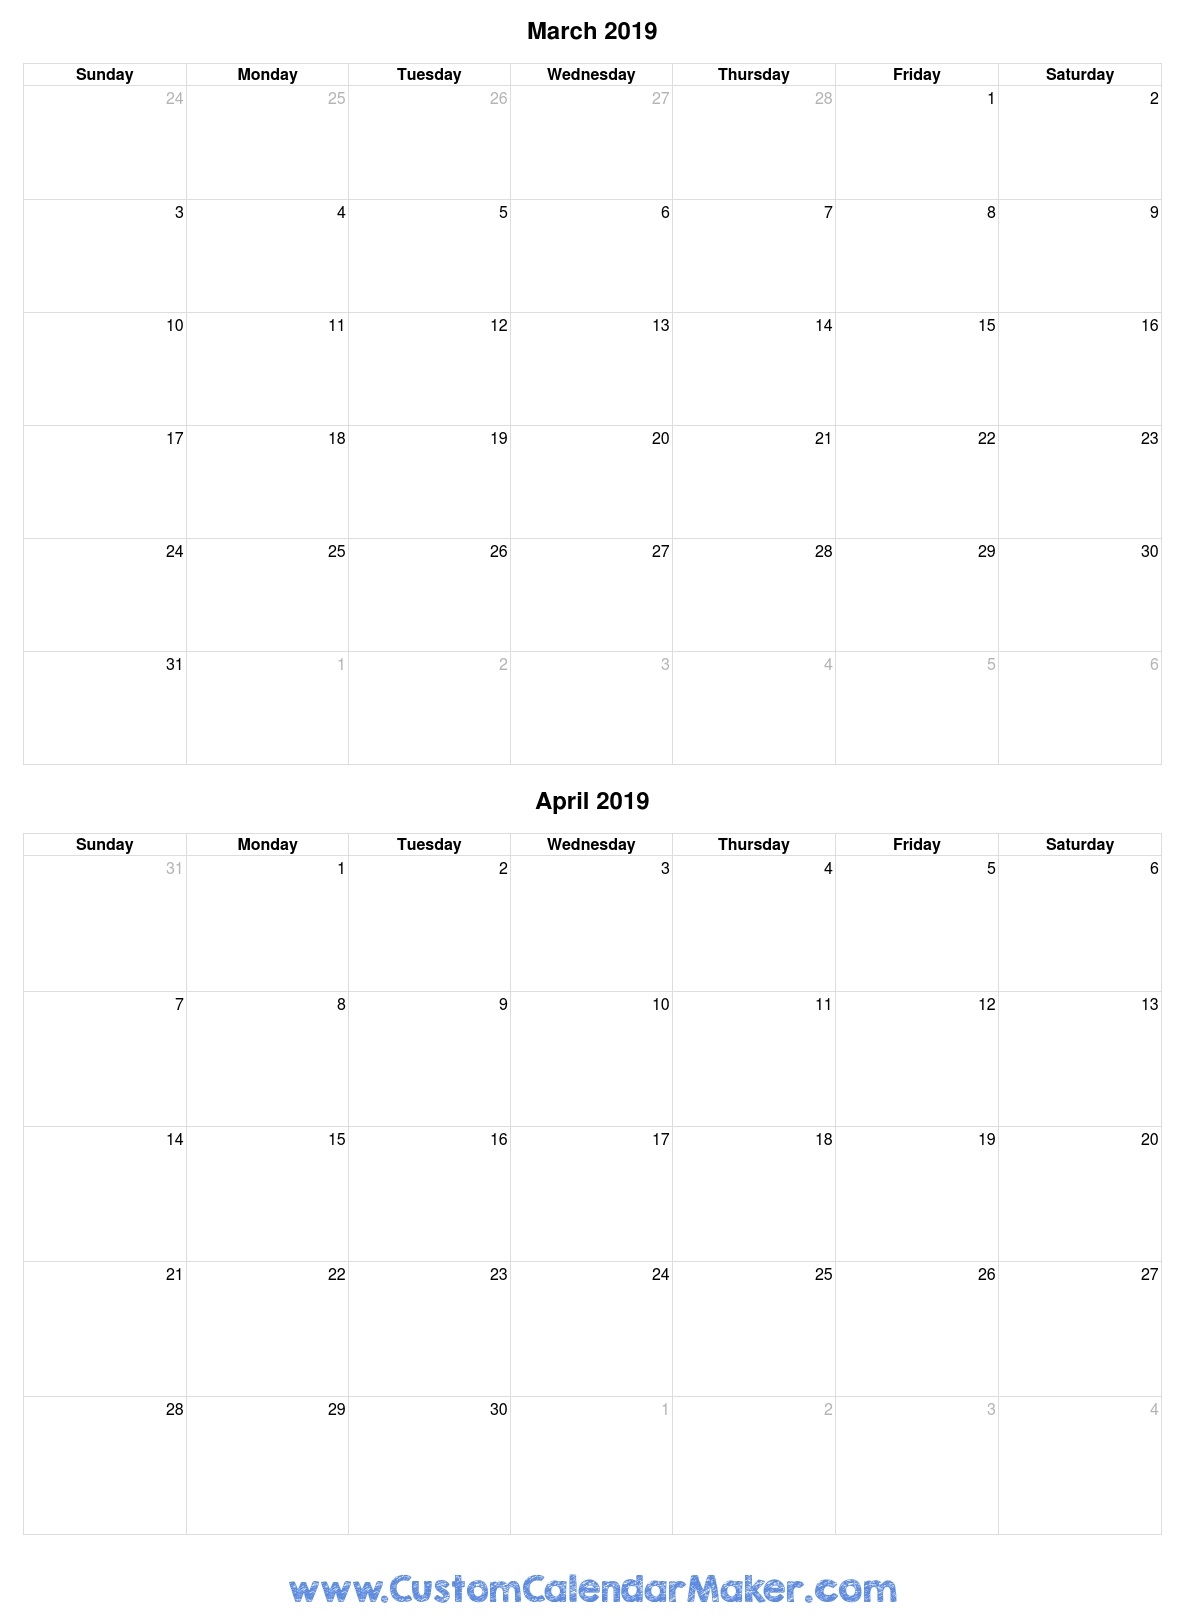 March April 2019 Printable Calendar